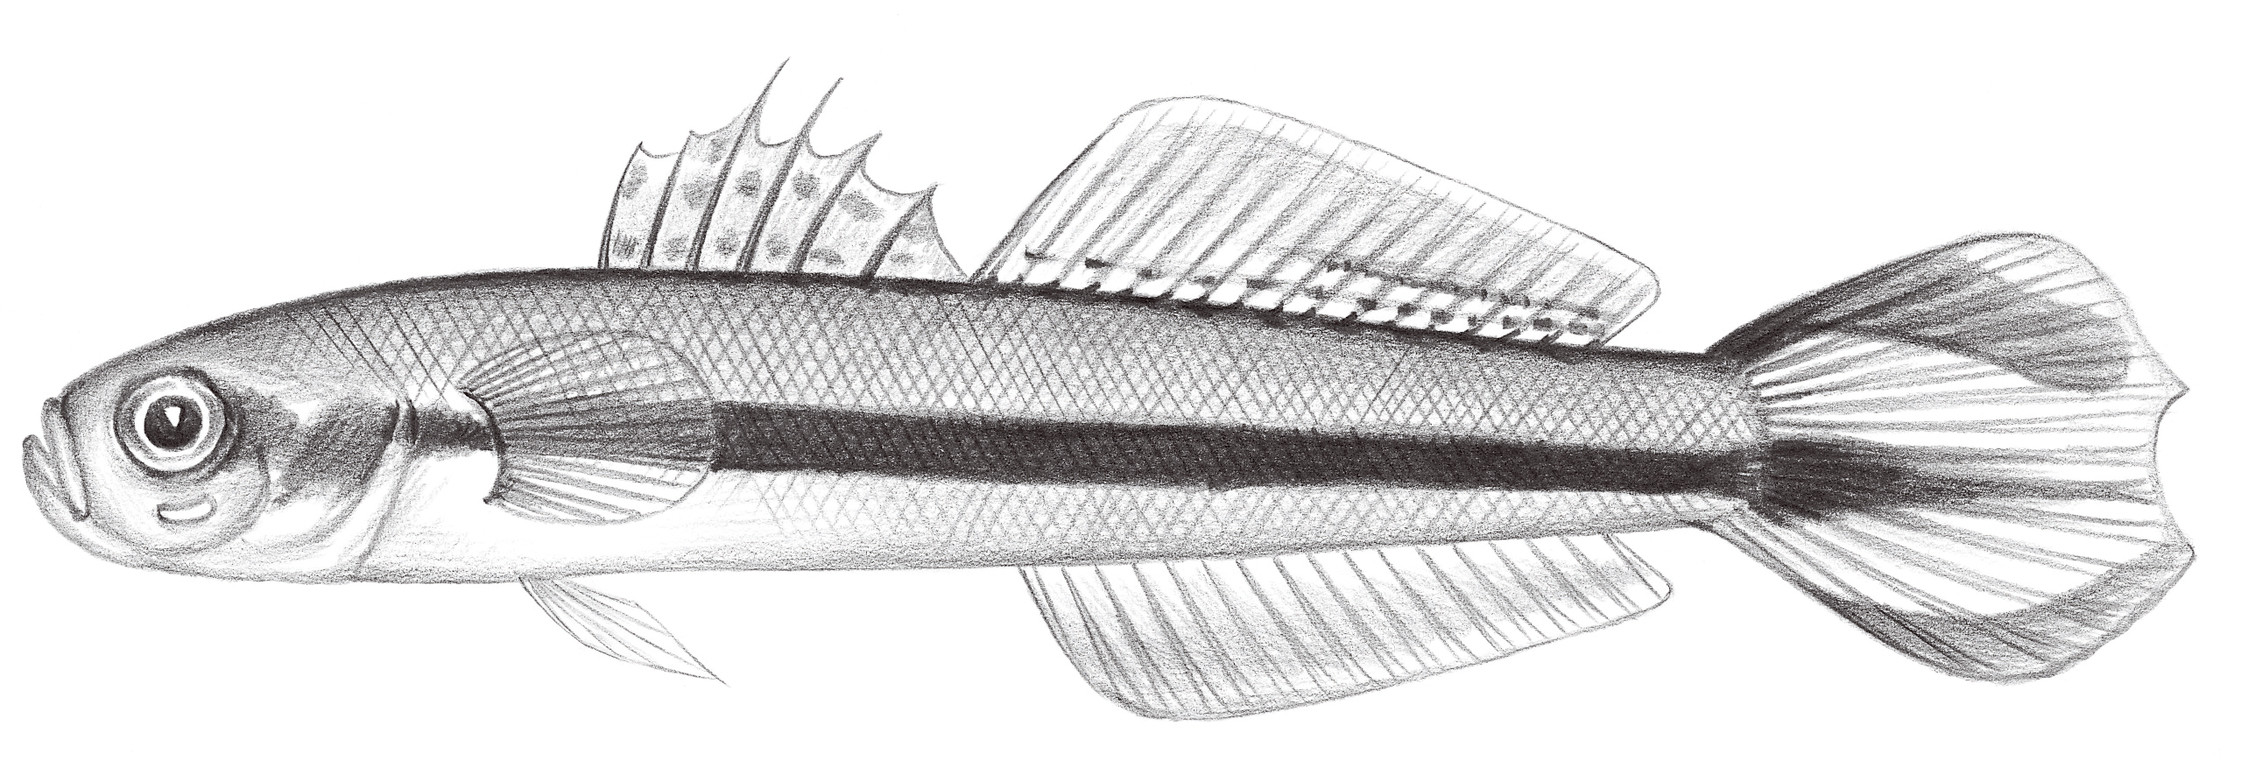 2259.	帶狀舌塘鱧 Parioglossus taeniatus Regan, 1912